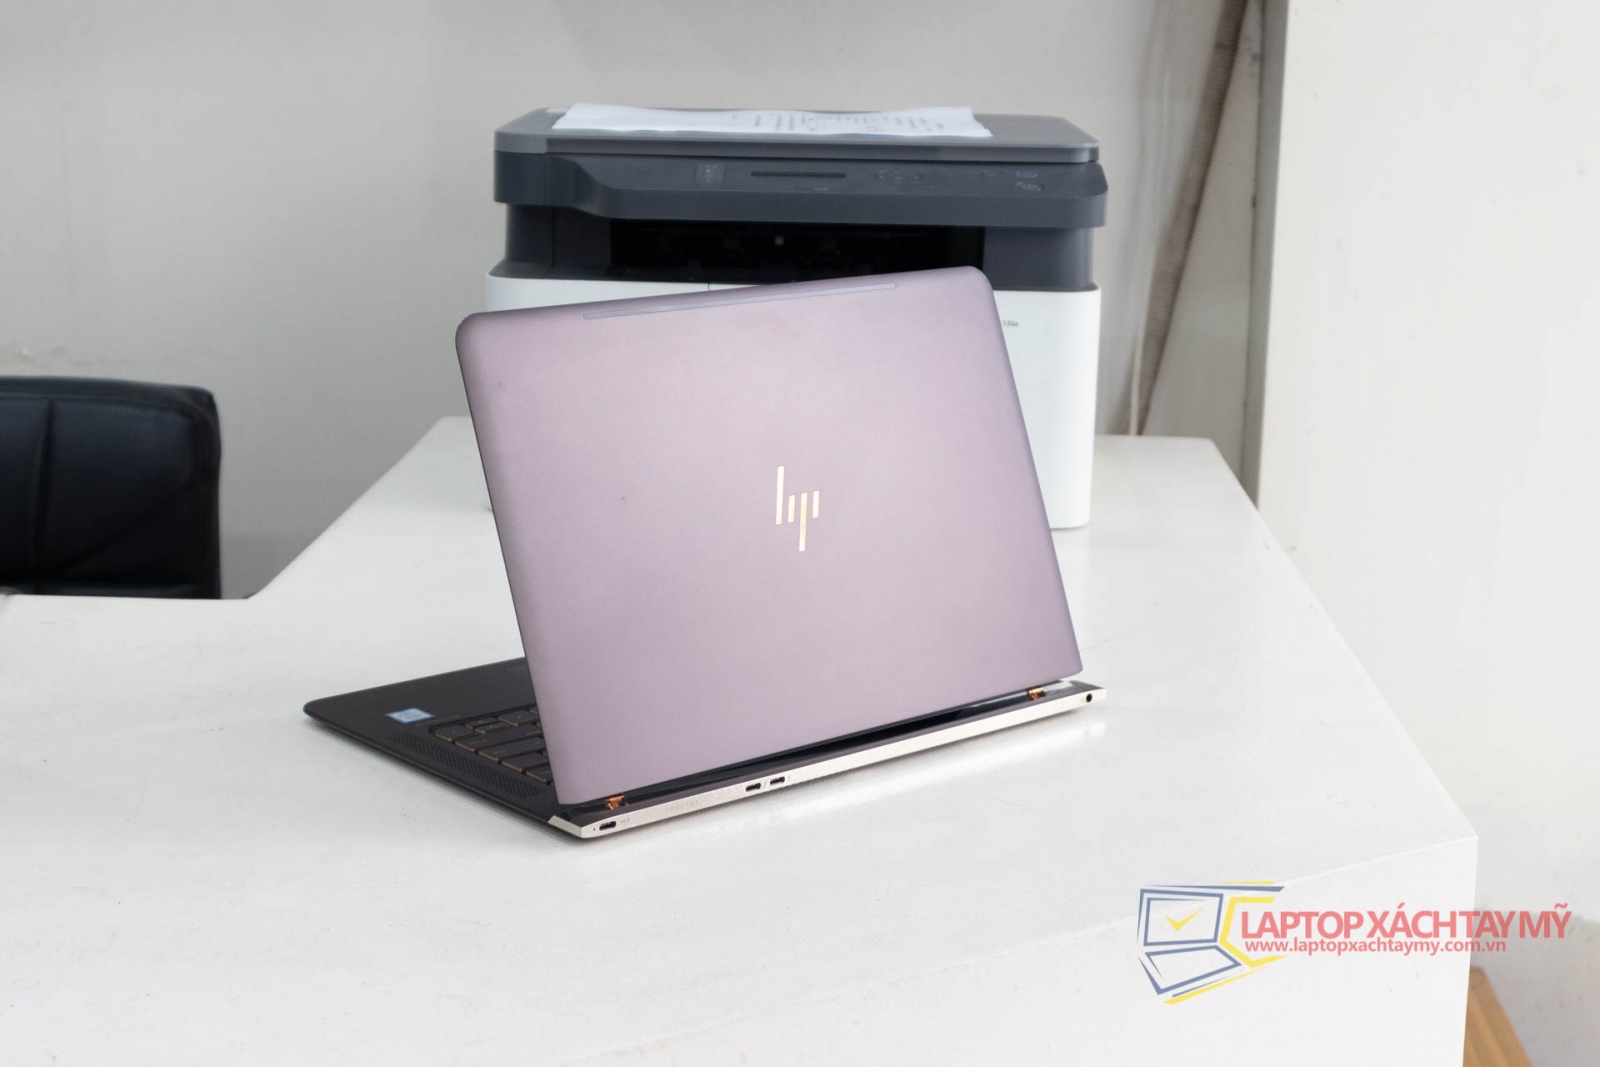 HP Spectre Notebook I7 6500U, Ram 8G, SSD 256G